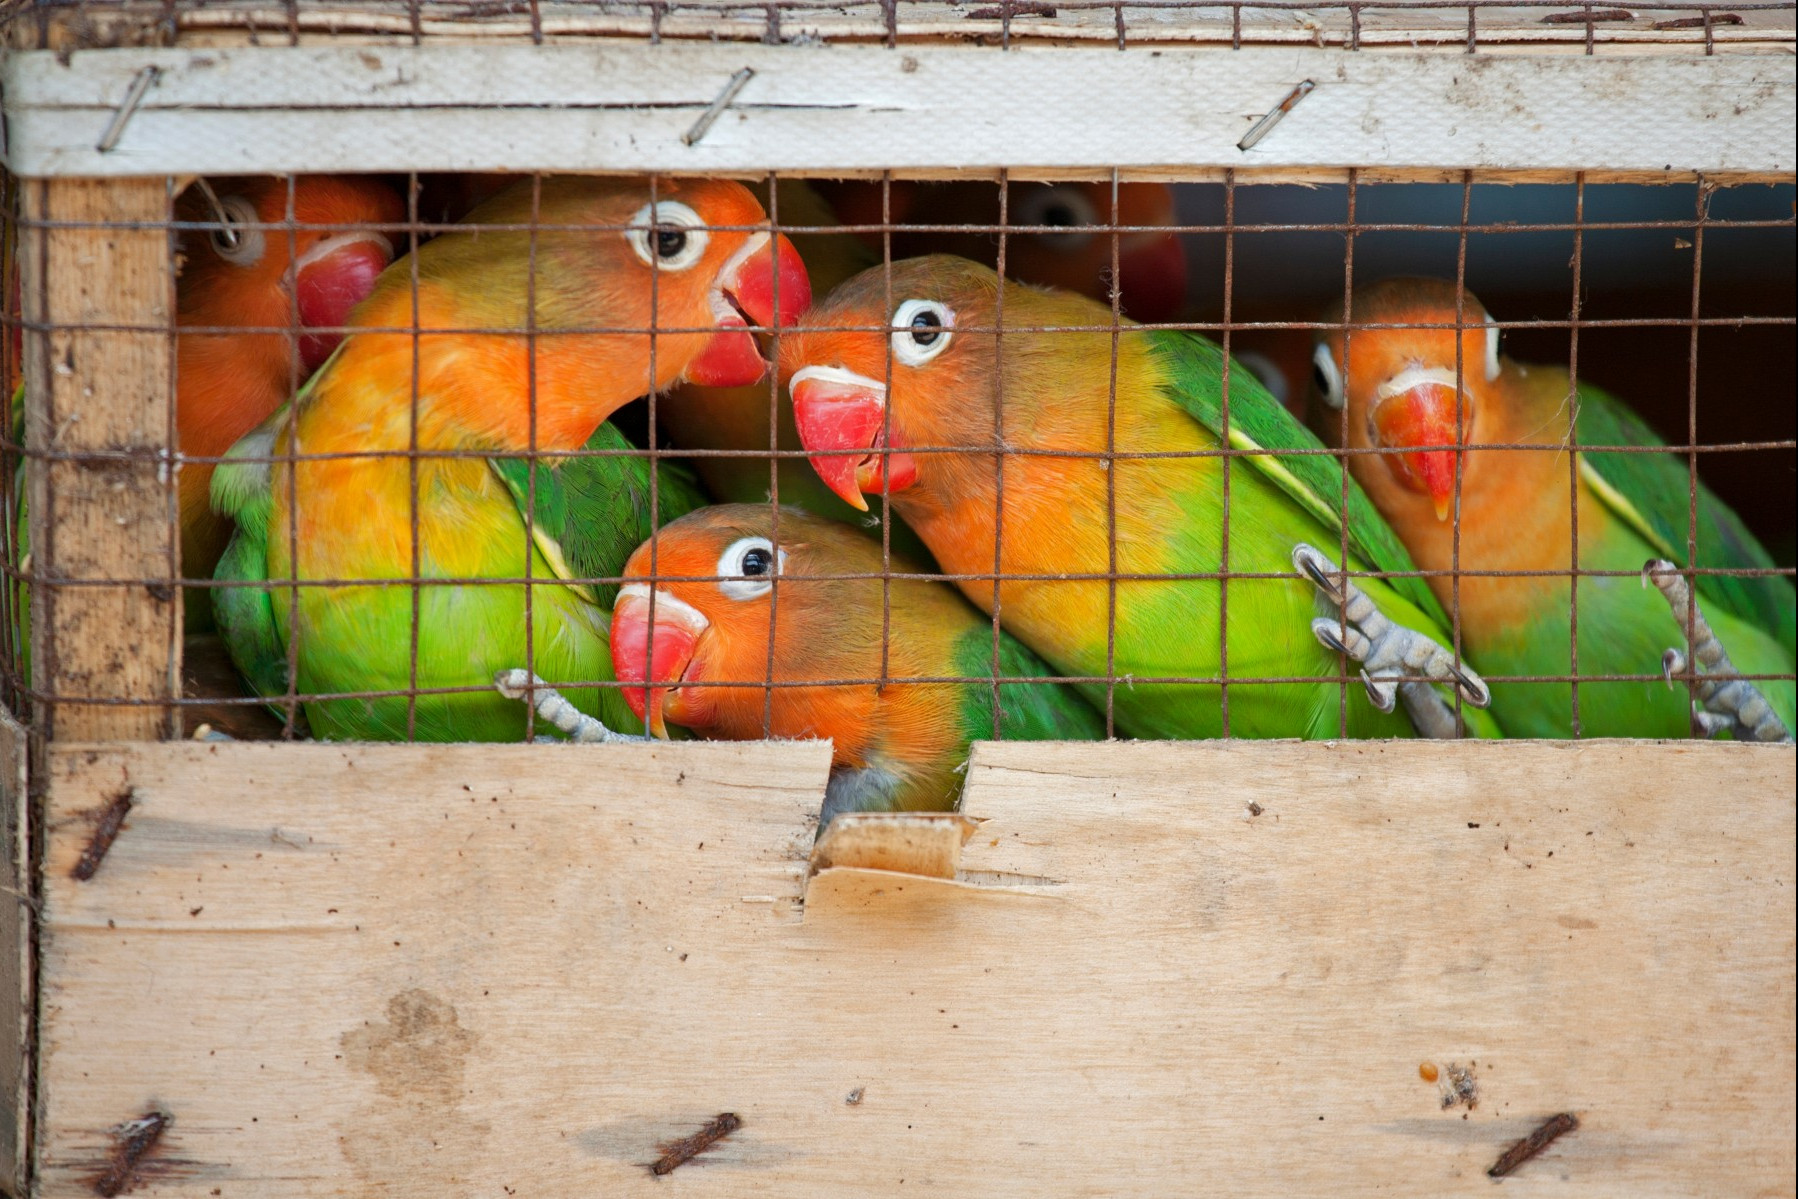 Photo: Lovebirds at a bird market ready for shipment to pet stores. DnDavis/Shutterstock